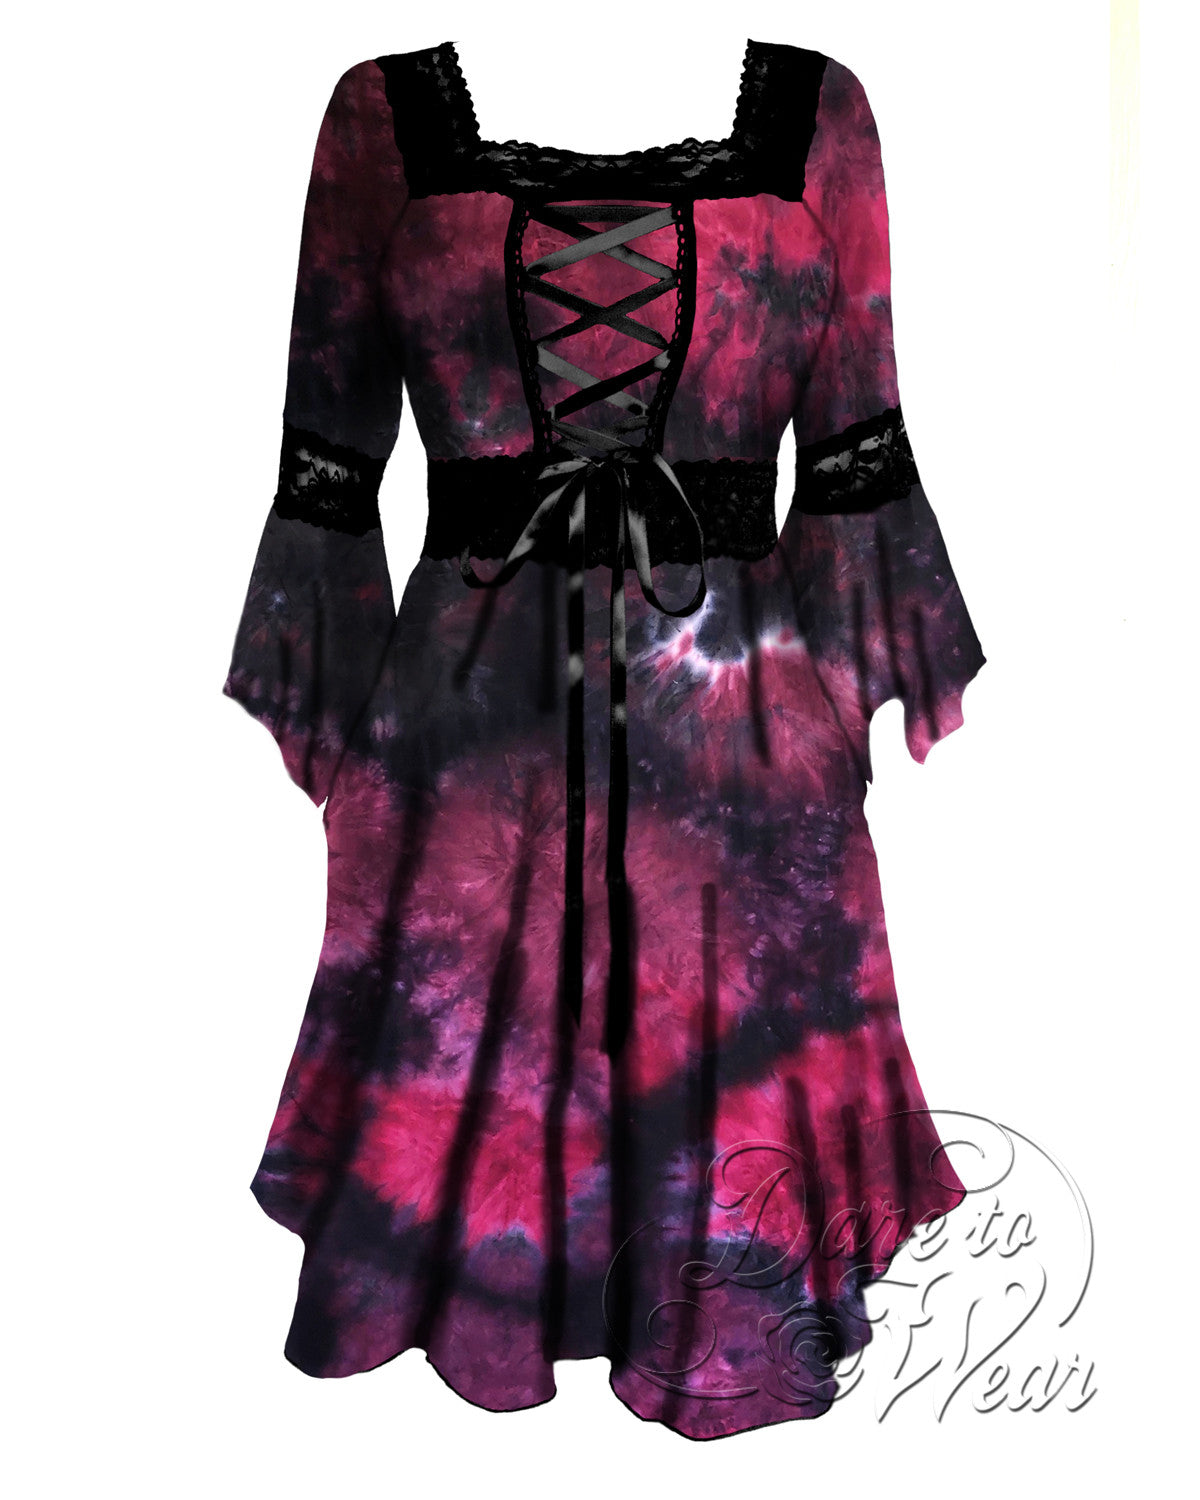 Renaissance Dress in Heartache  Blood Red Black Gothic Tie-dye Corset Gown  - Dare Fashion Globe